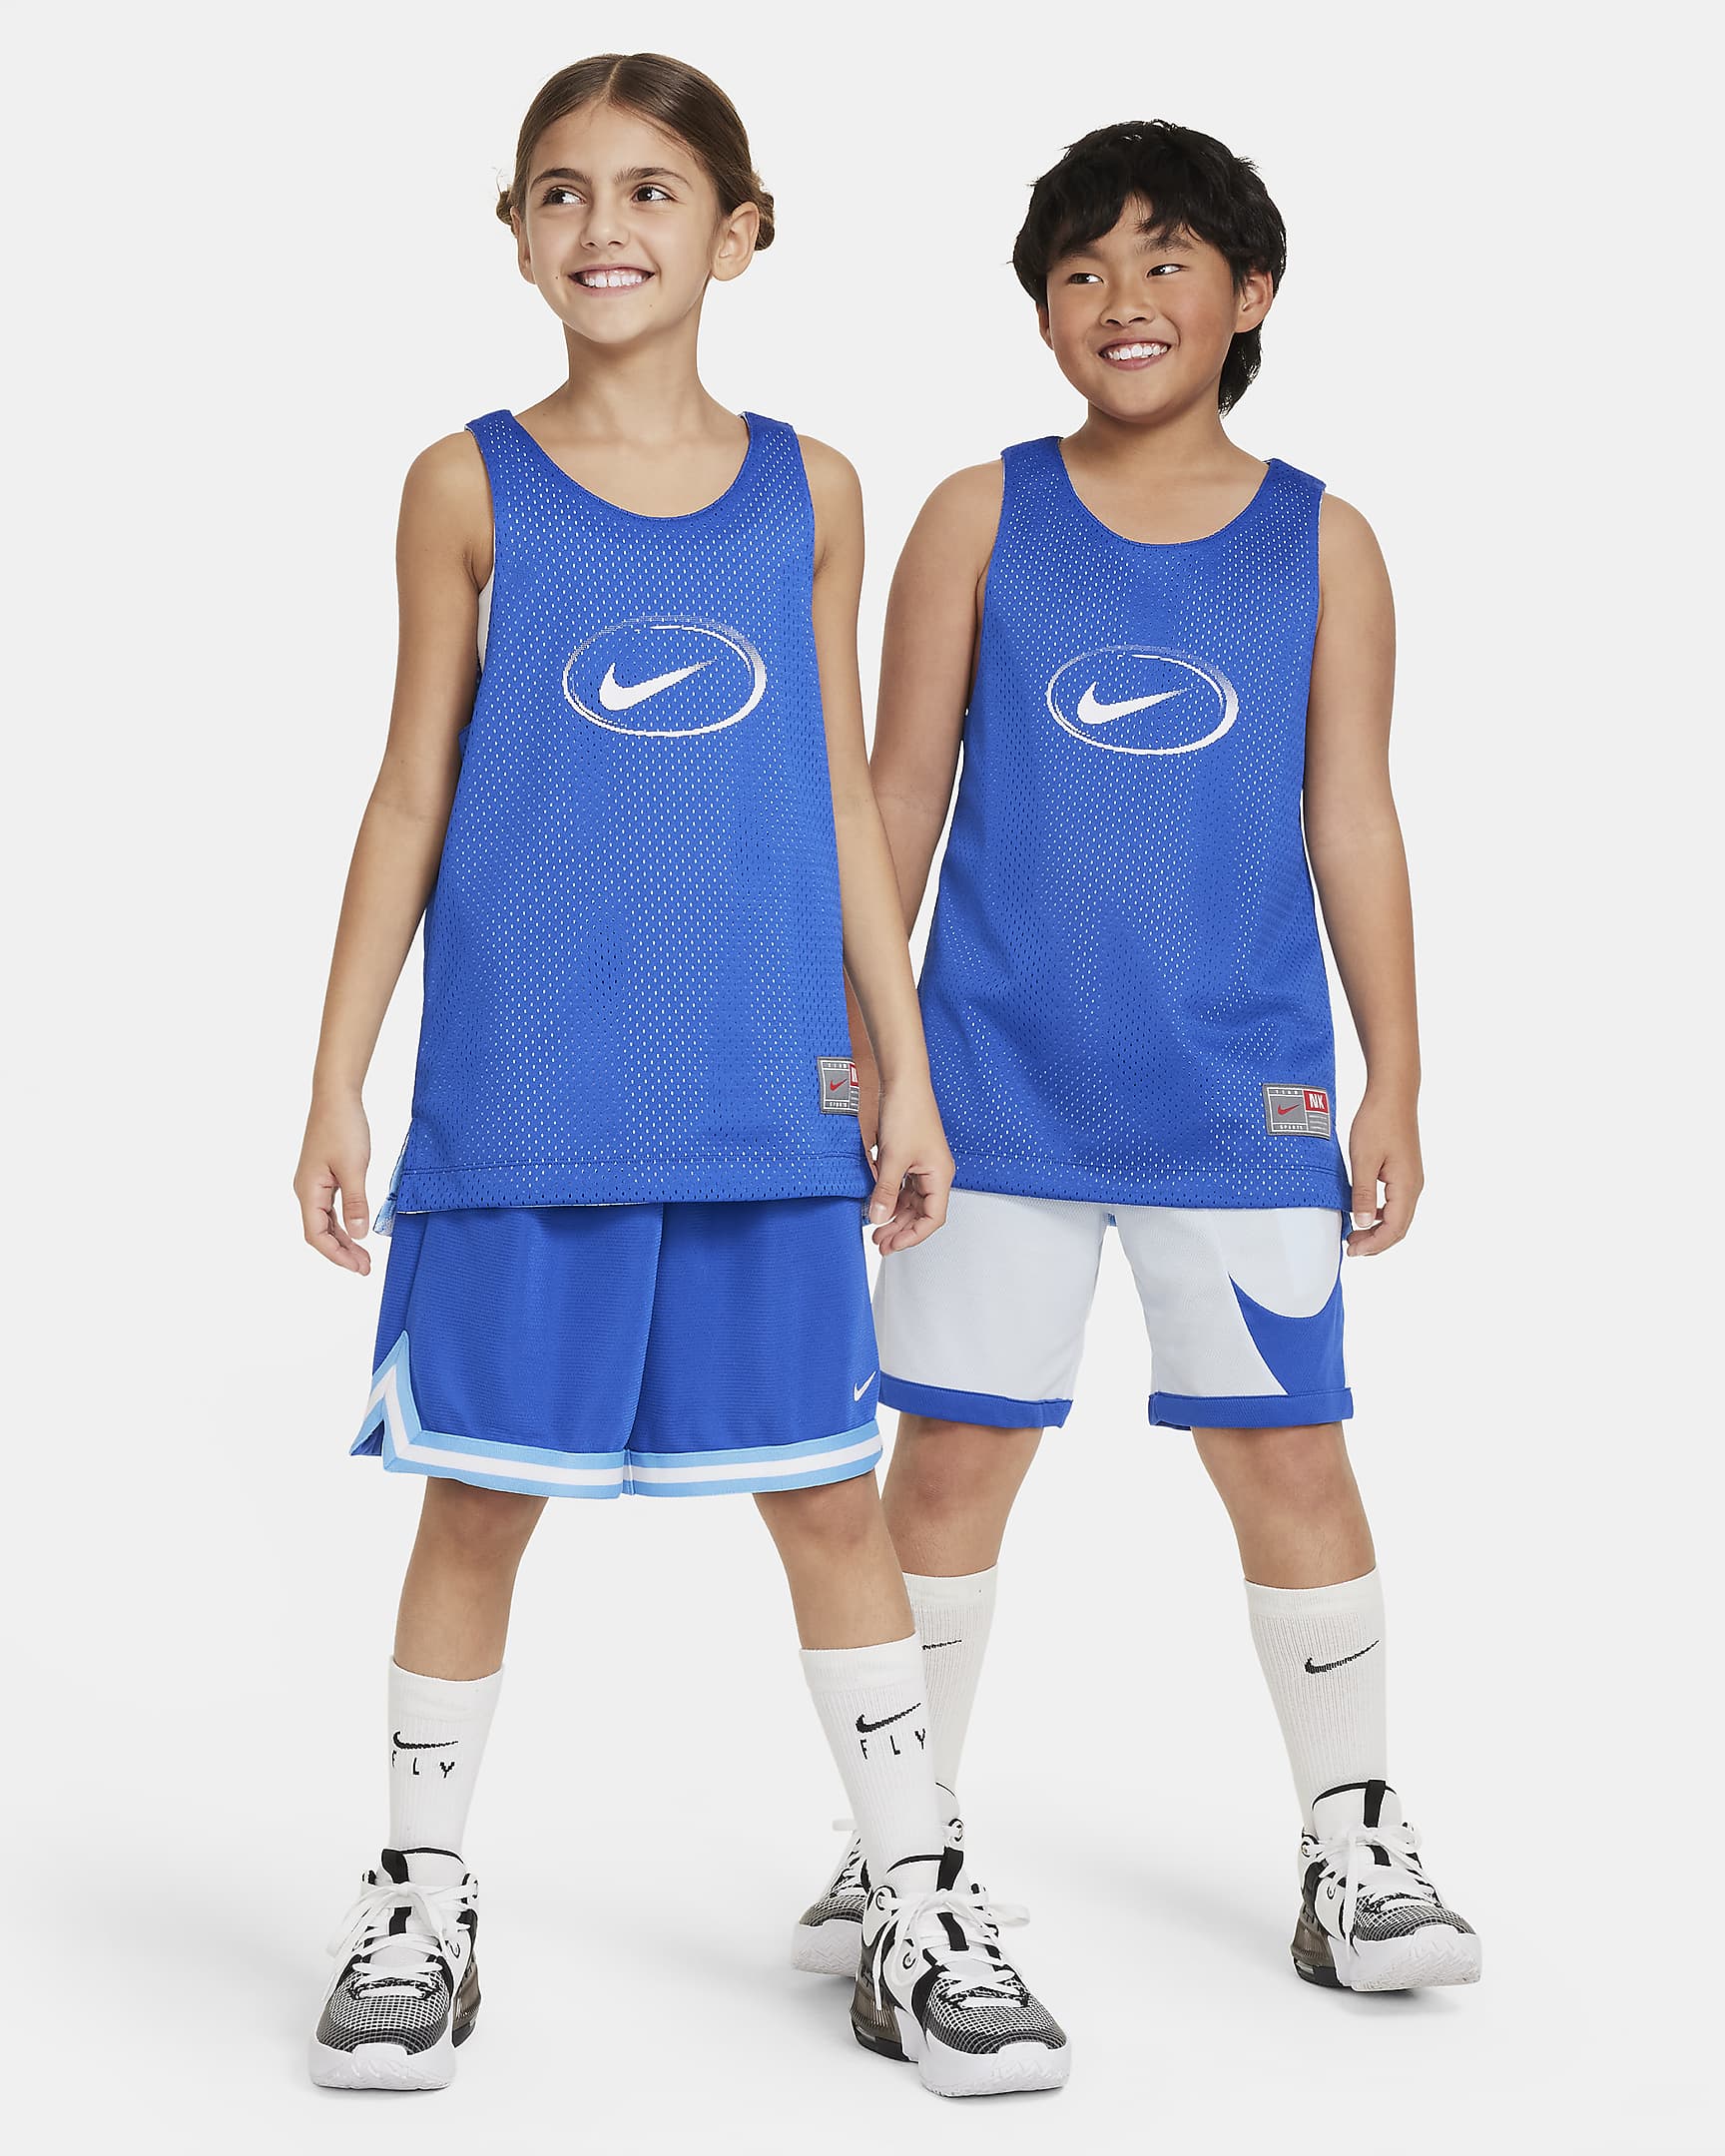 Nike Culture of Basketball Big Kids' Reversible Jersey. Nike.com